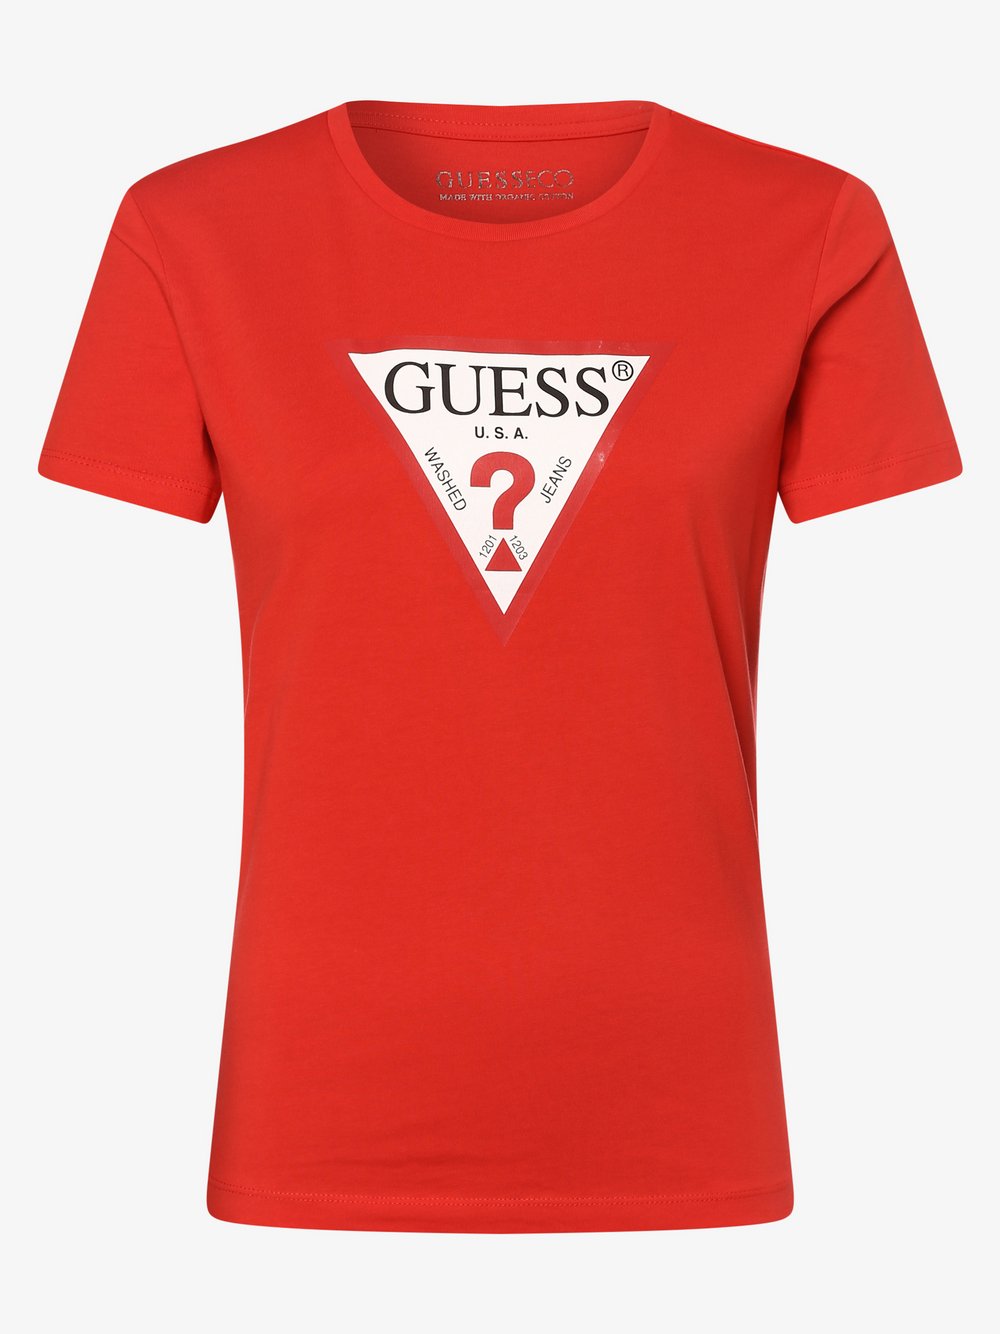 GUESS - T-shirt damski, czerwony